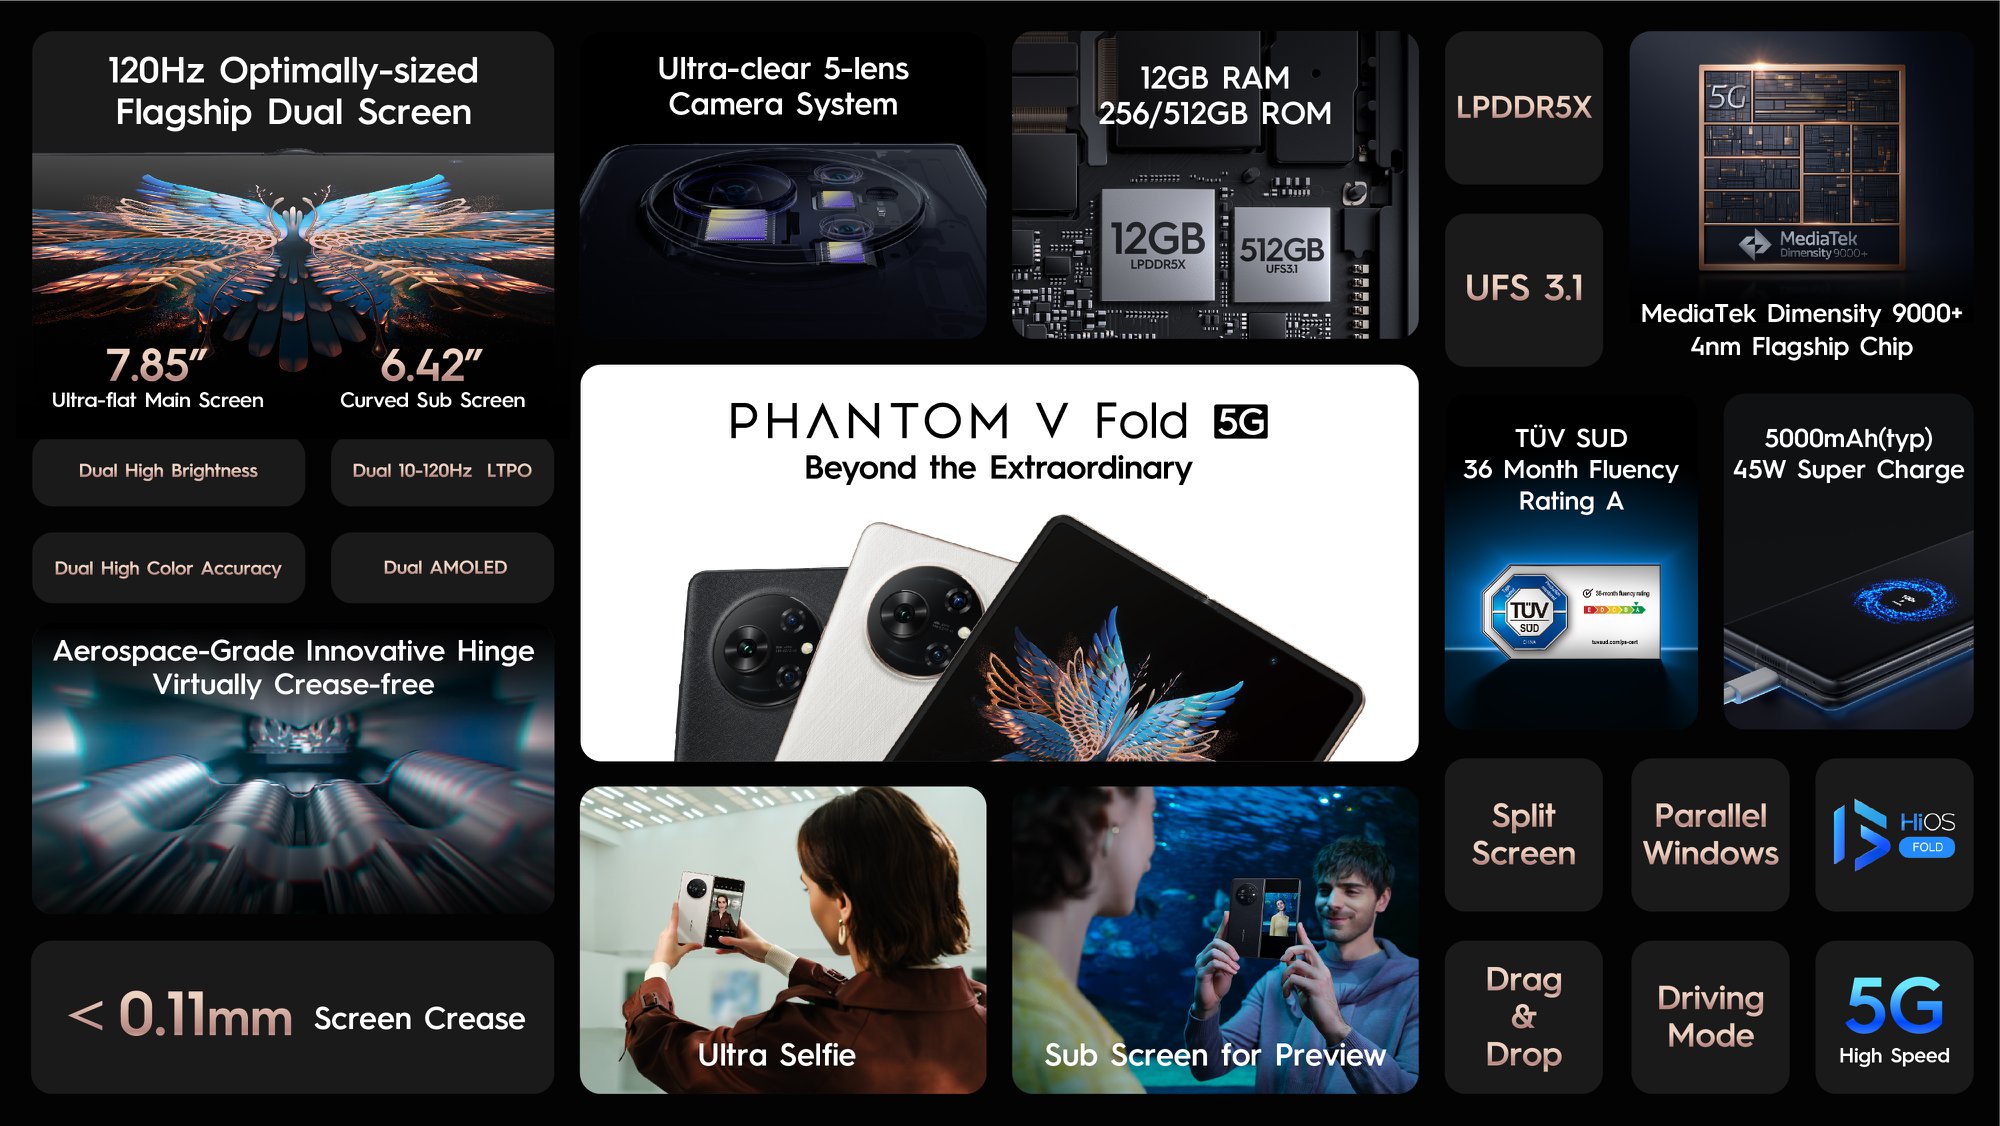 Tecno випустила складний смартфон Phantom V Fold